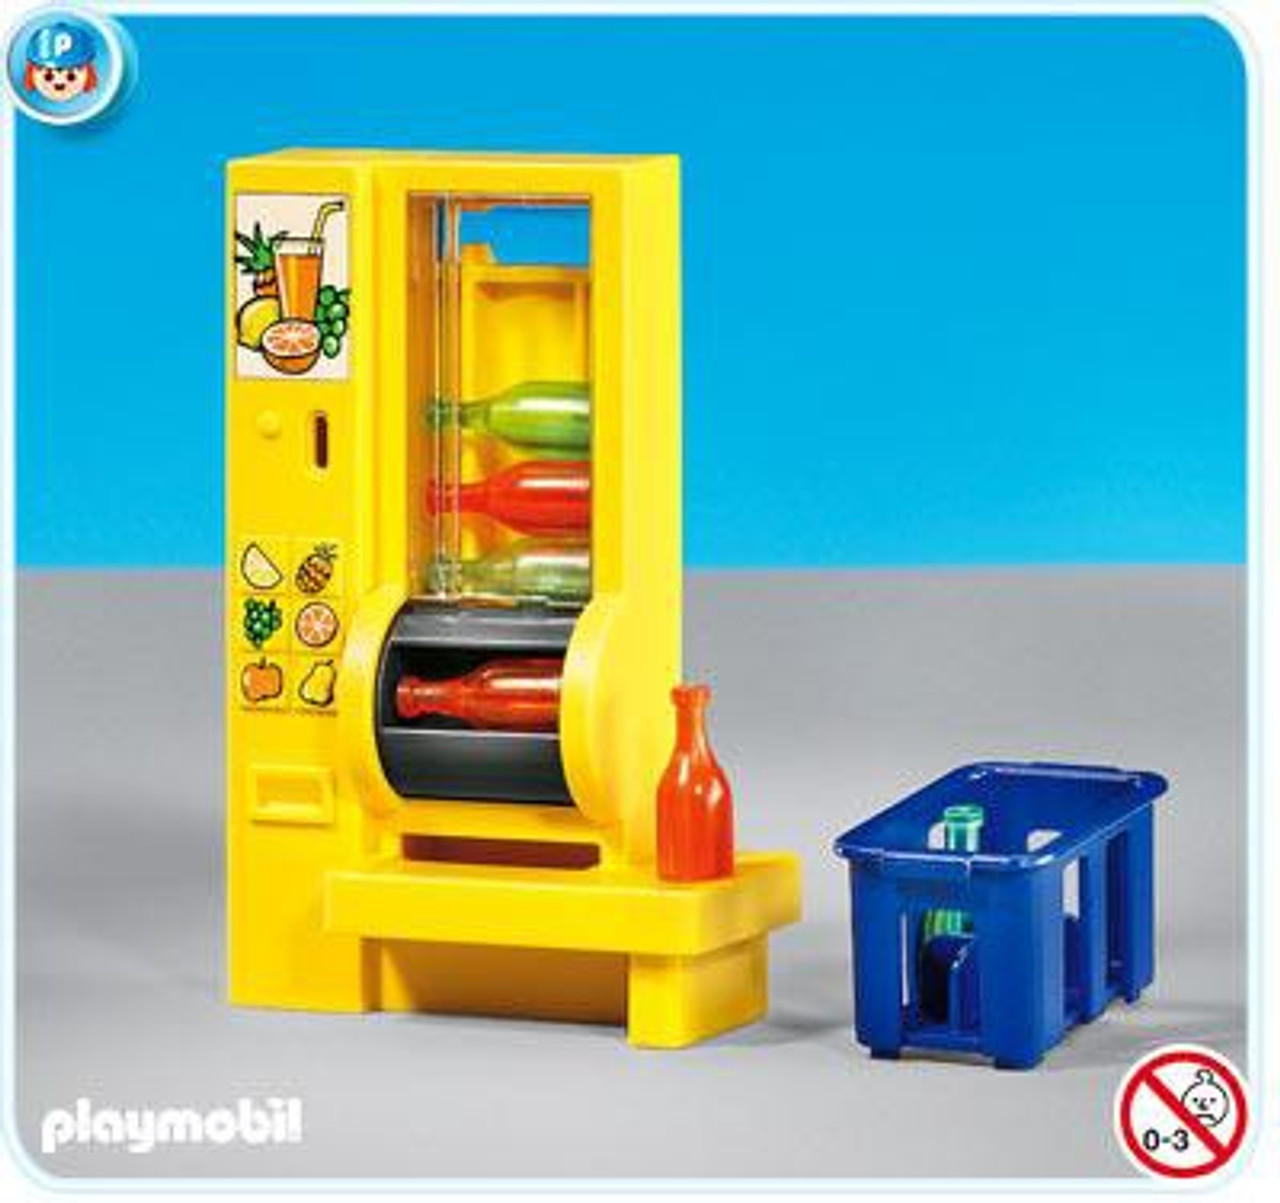 Playmobil Suburban Life Vending Machine Set 7931 Toywiz - suburban life roblox